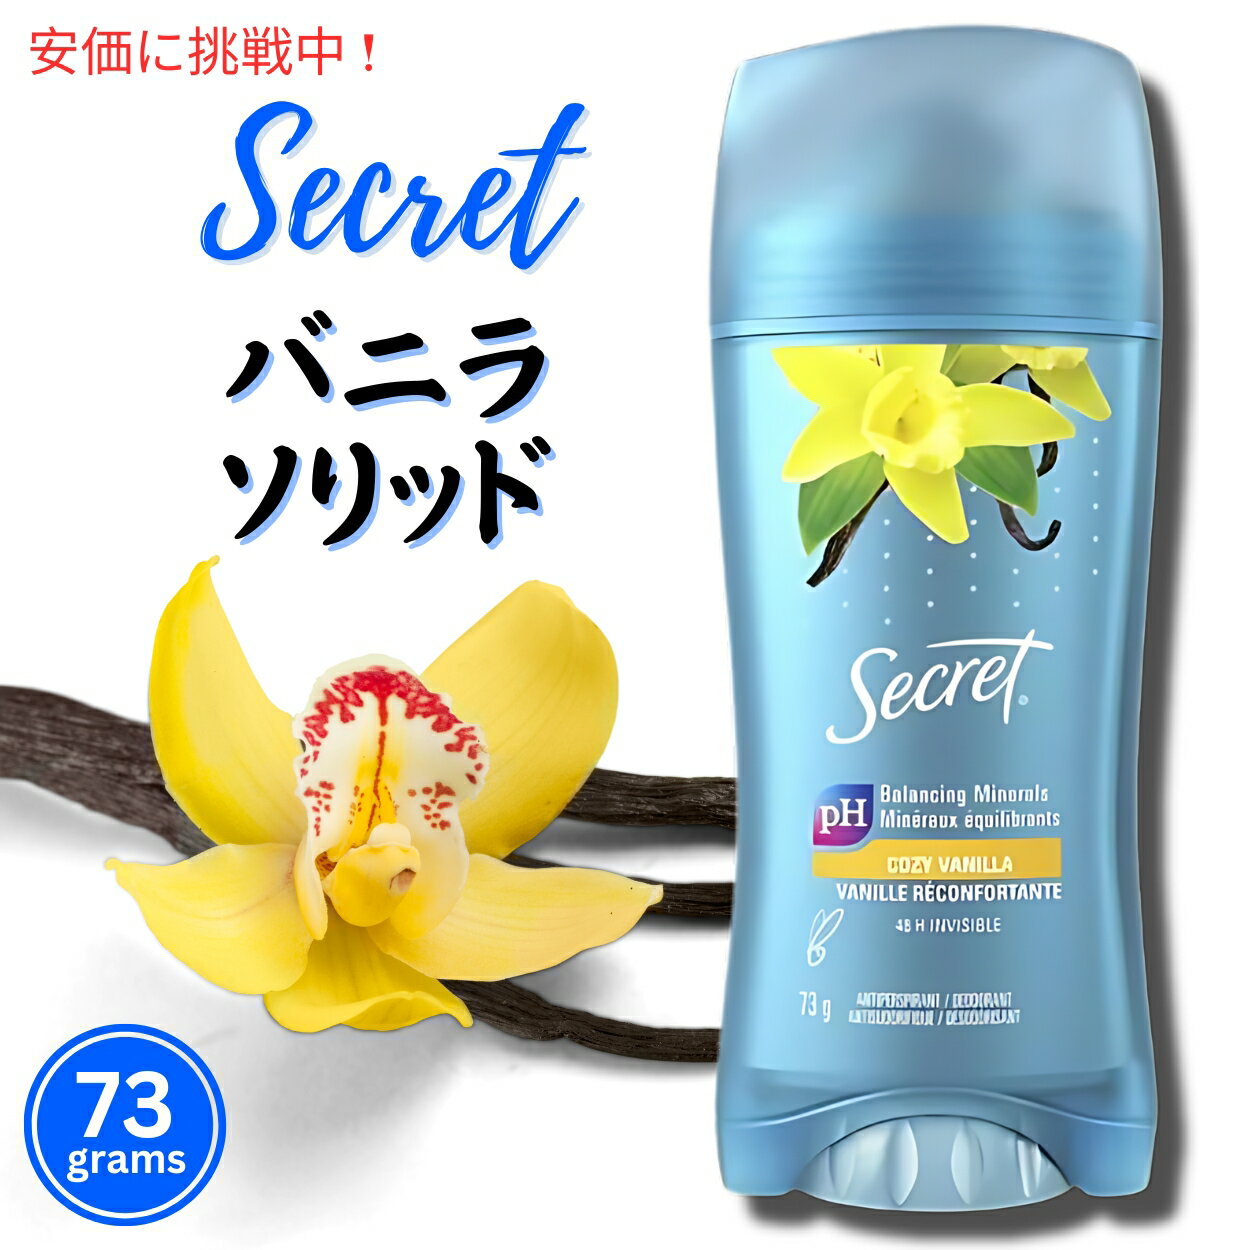 Secret V[Nbg CrWu\bh [oj] fIhg 73g Invisible Solid Antiperspirant Deodorant 2.6oz